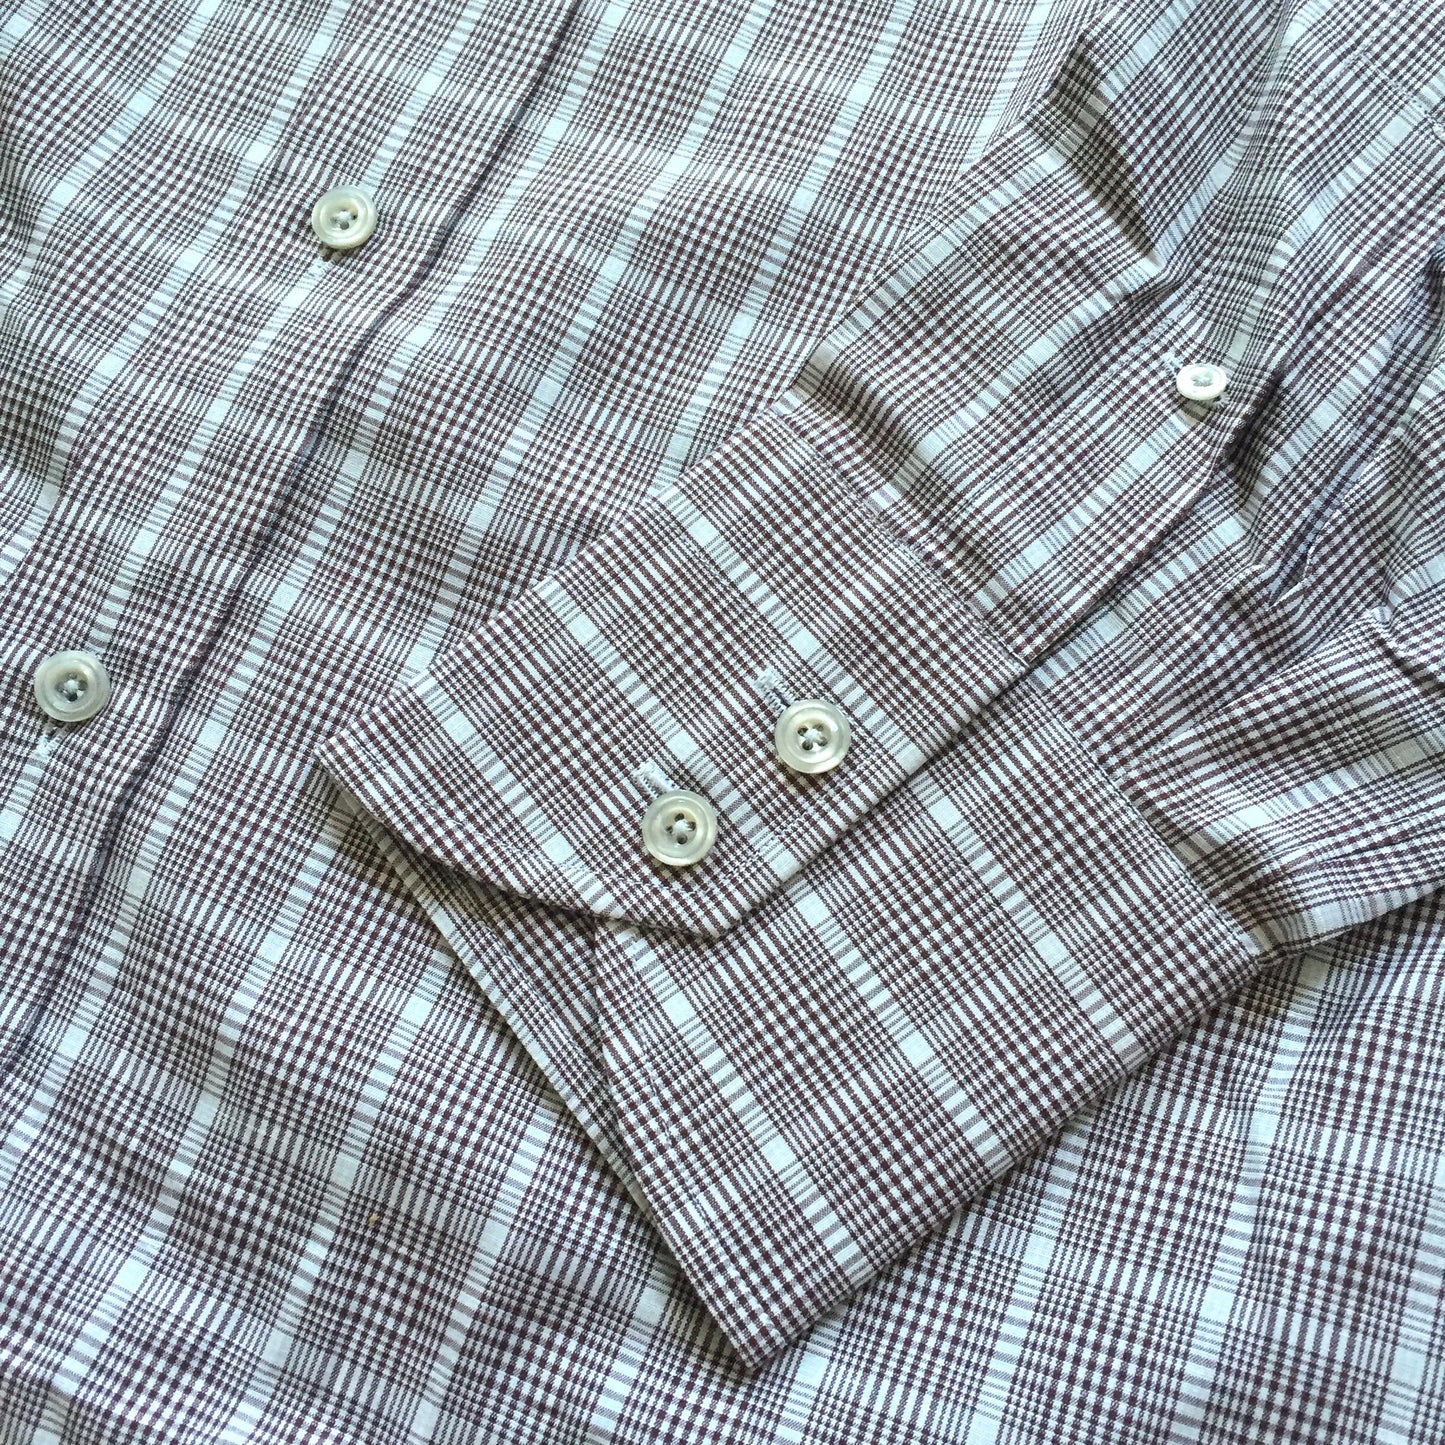 Tom Ford - Brown Glen Plaid Dress Shirt